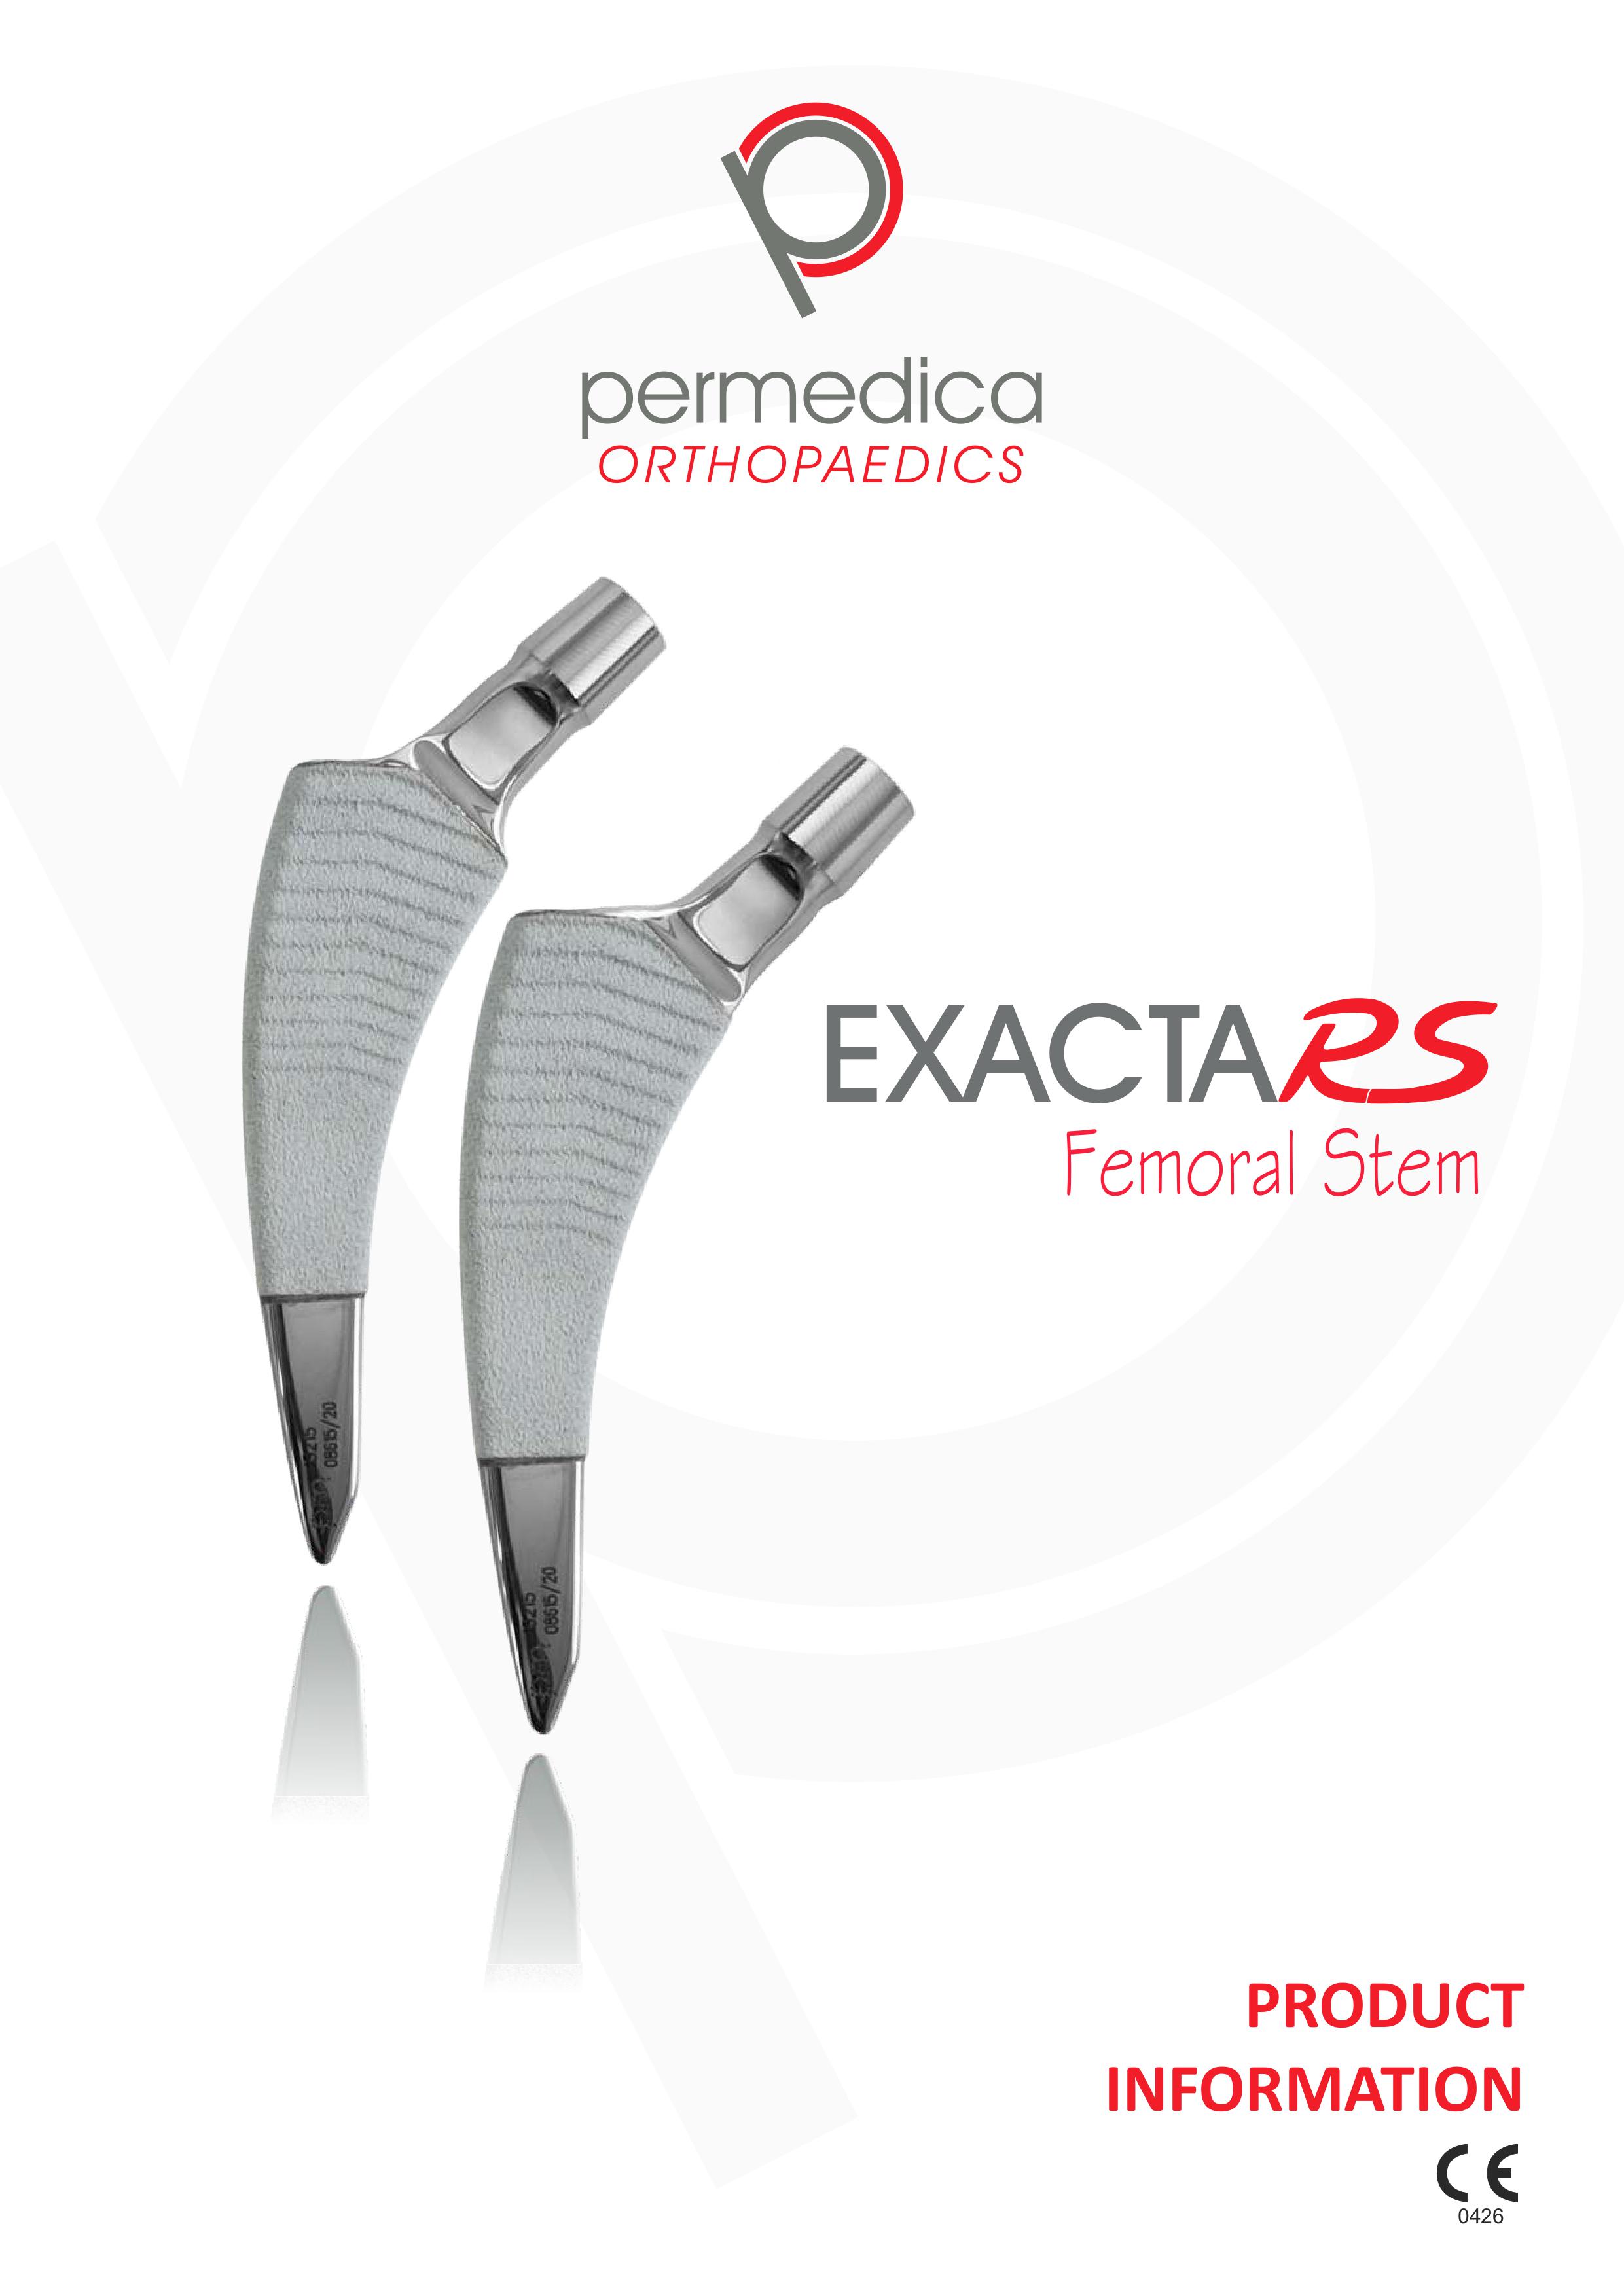 EXACTA RS stem